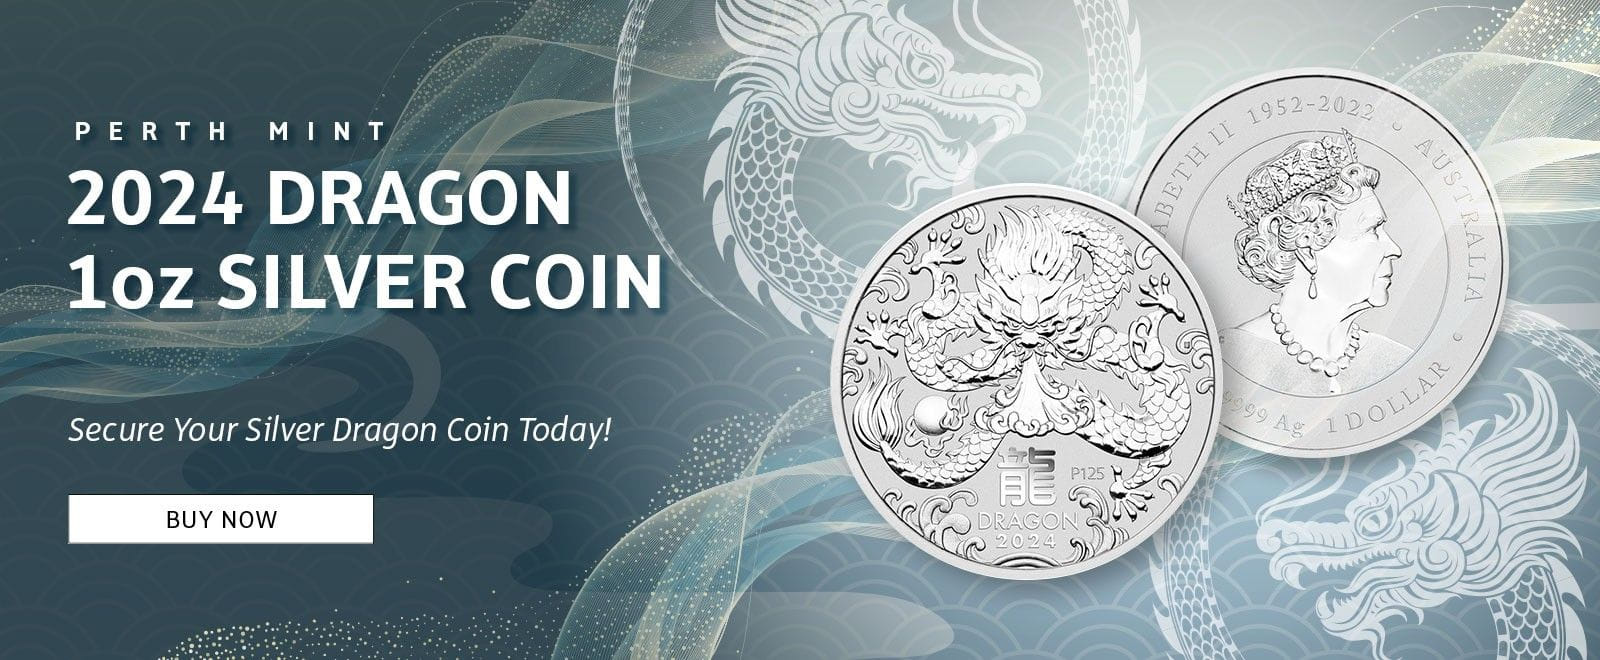 Perth Mint 2024 Dragon 1 oz Silver Coin